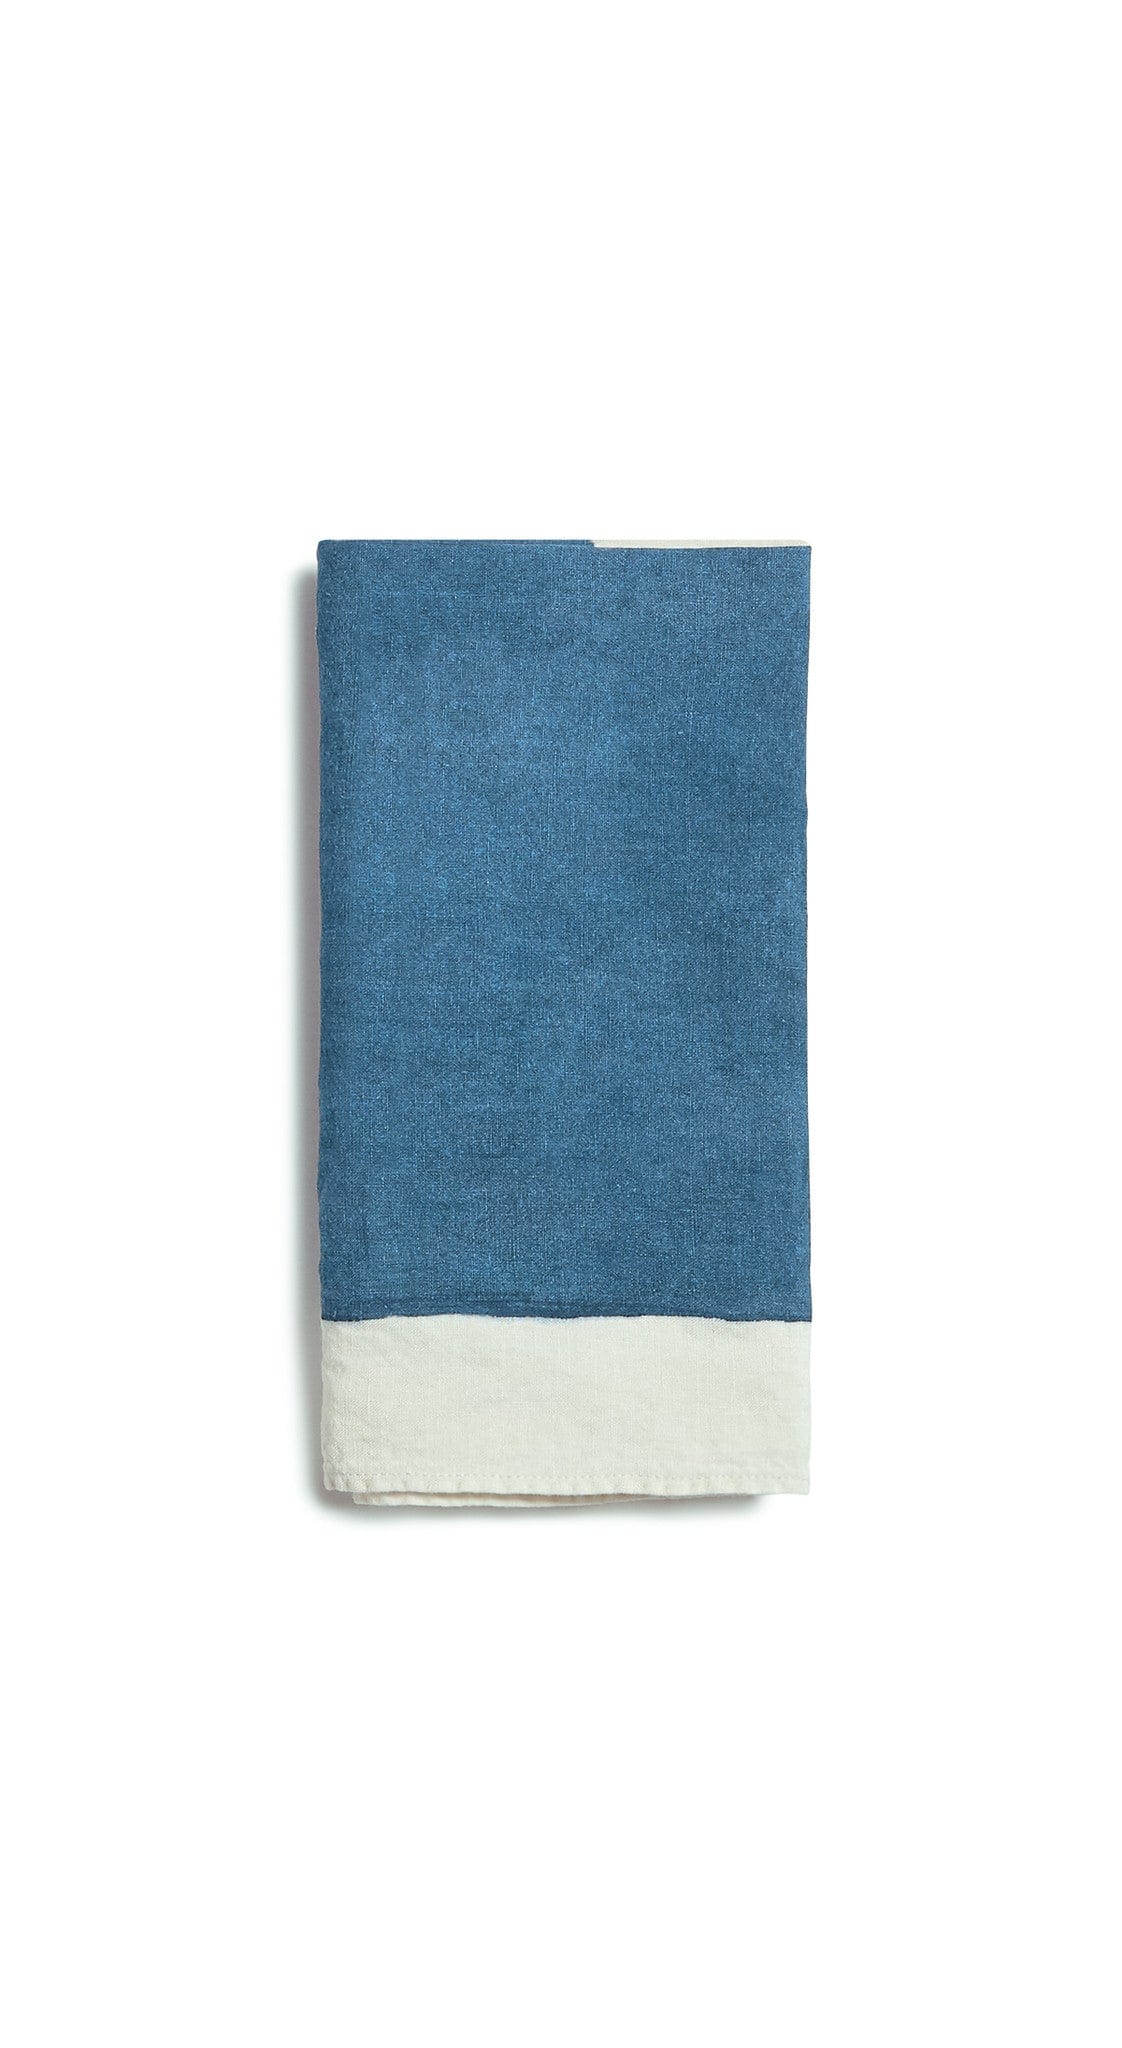 Full Field Linen Napkin in Midnight Blue, 50x50cm